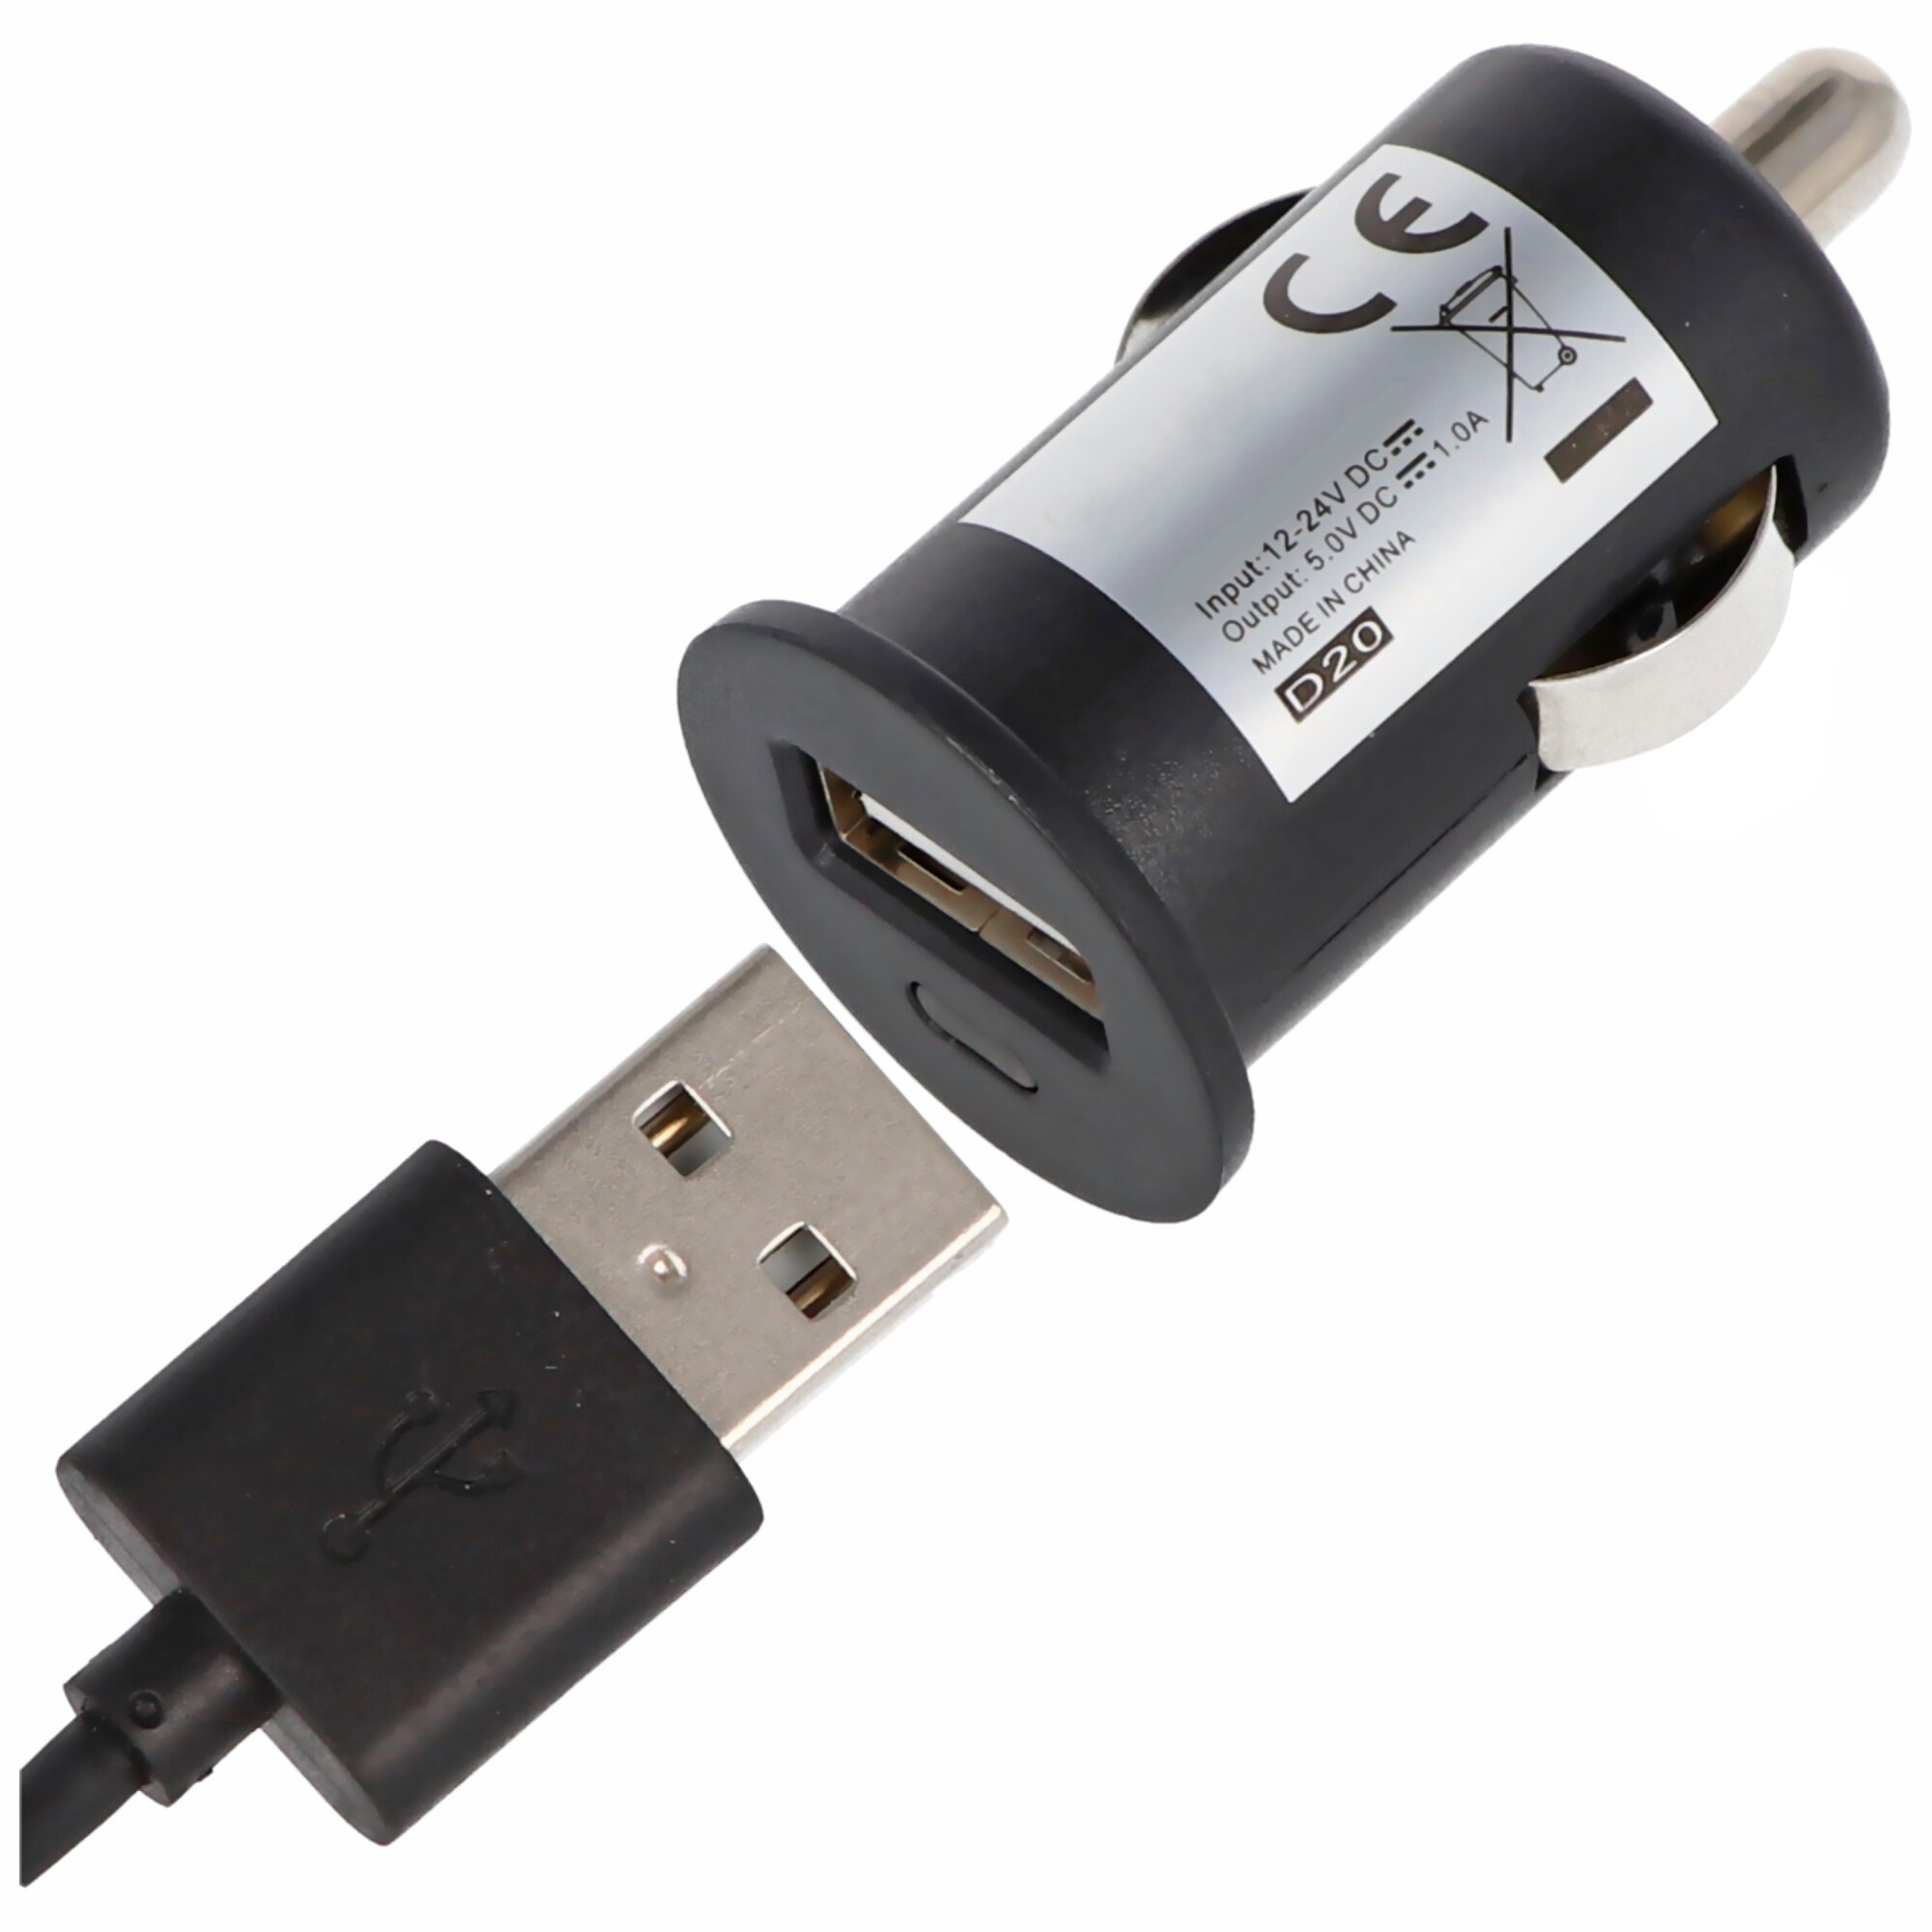 KFZ 019004: KFZ - USB-Ladebuchse, 12 - 24V, 5V - 2,1A, Einbau, mit Deckel  bei reichelt elektronik